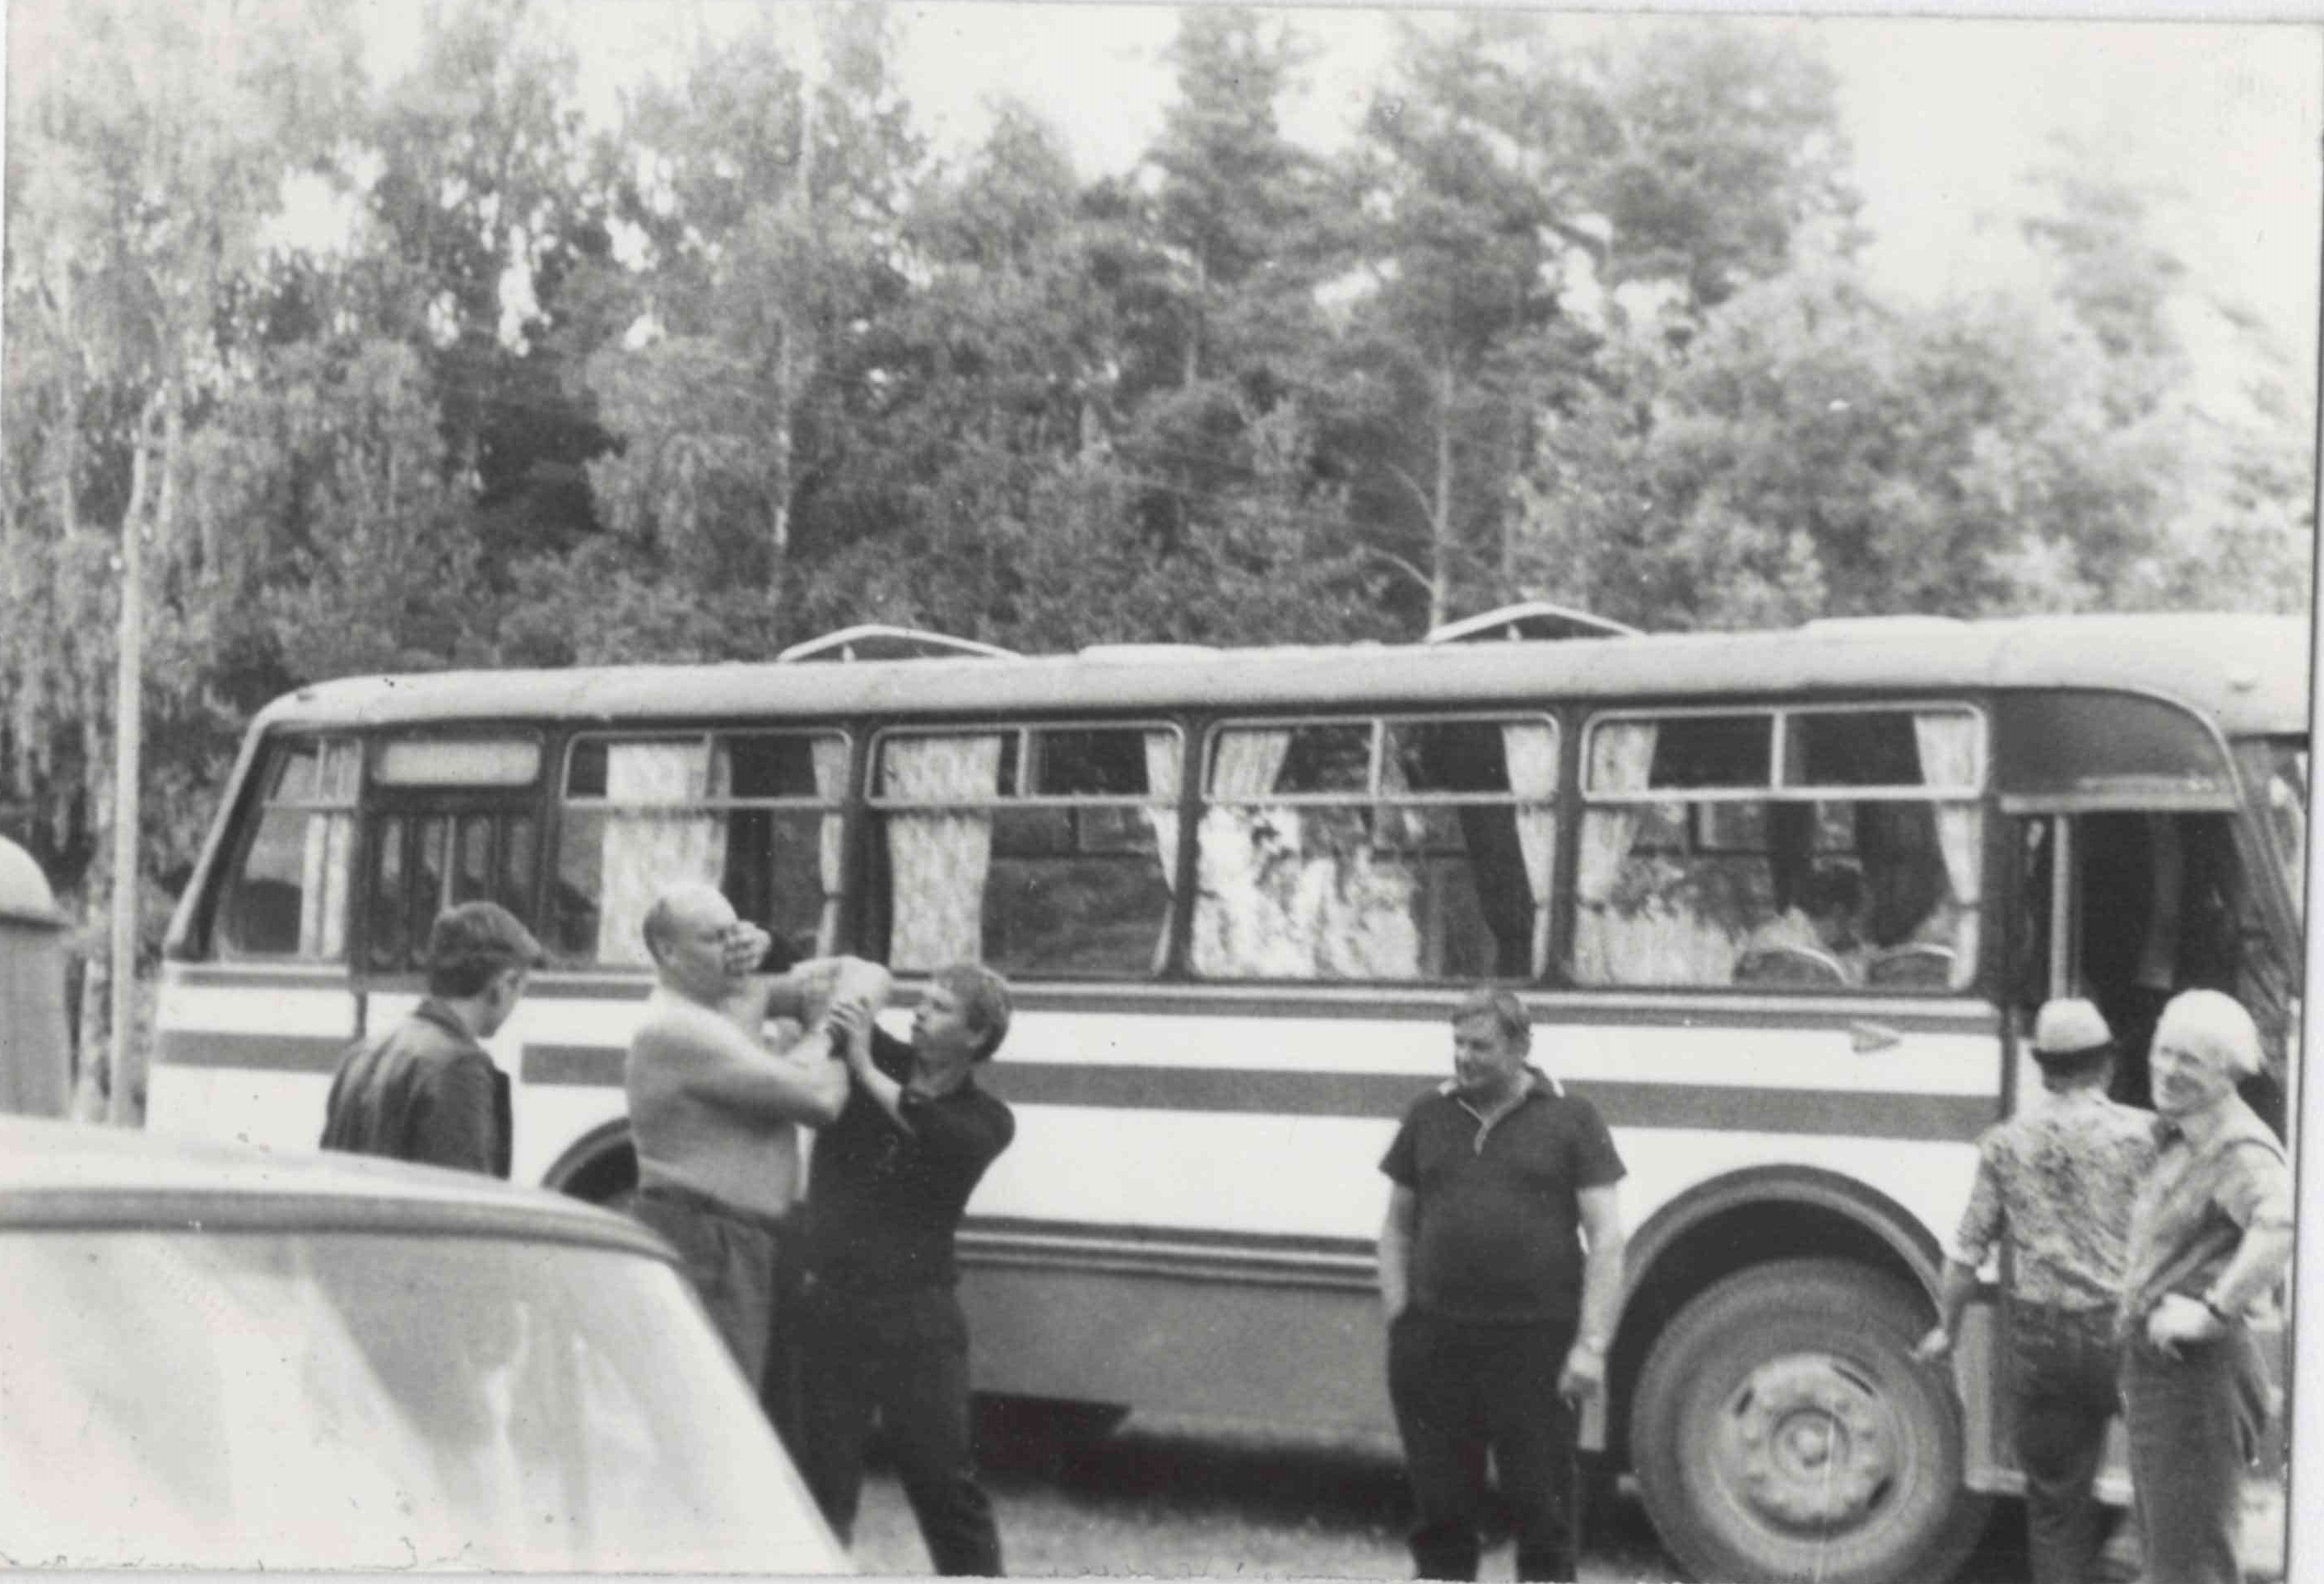 Silotegijad with bus in Latvia